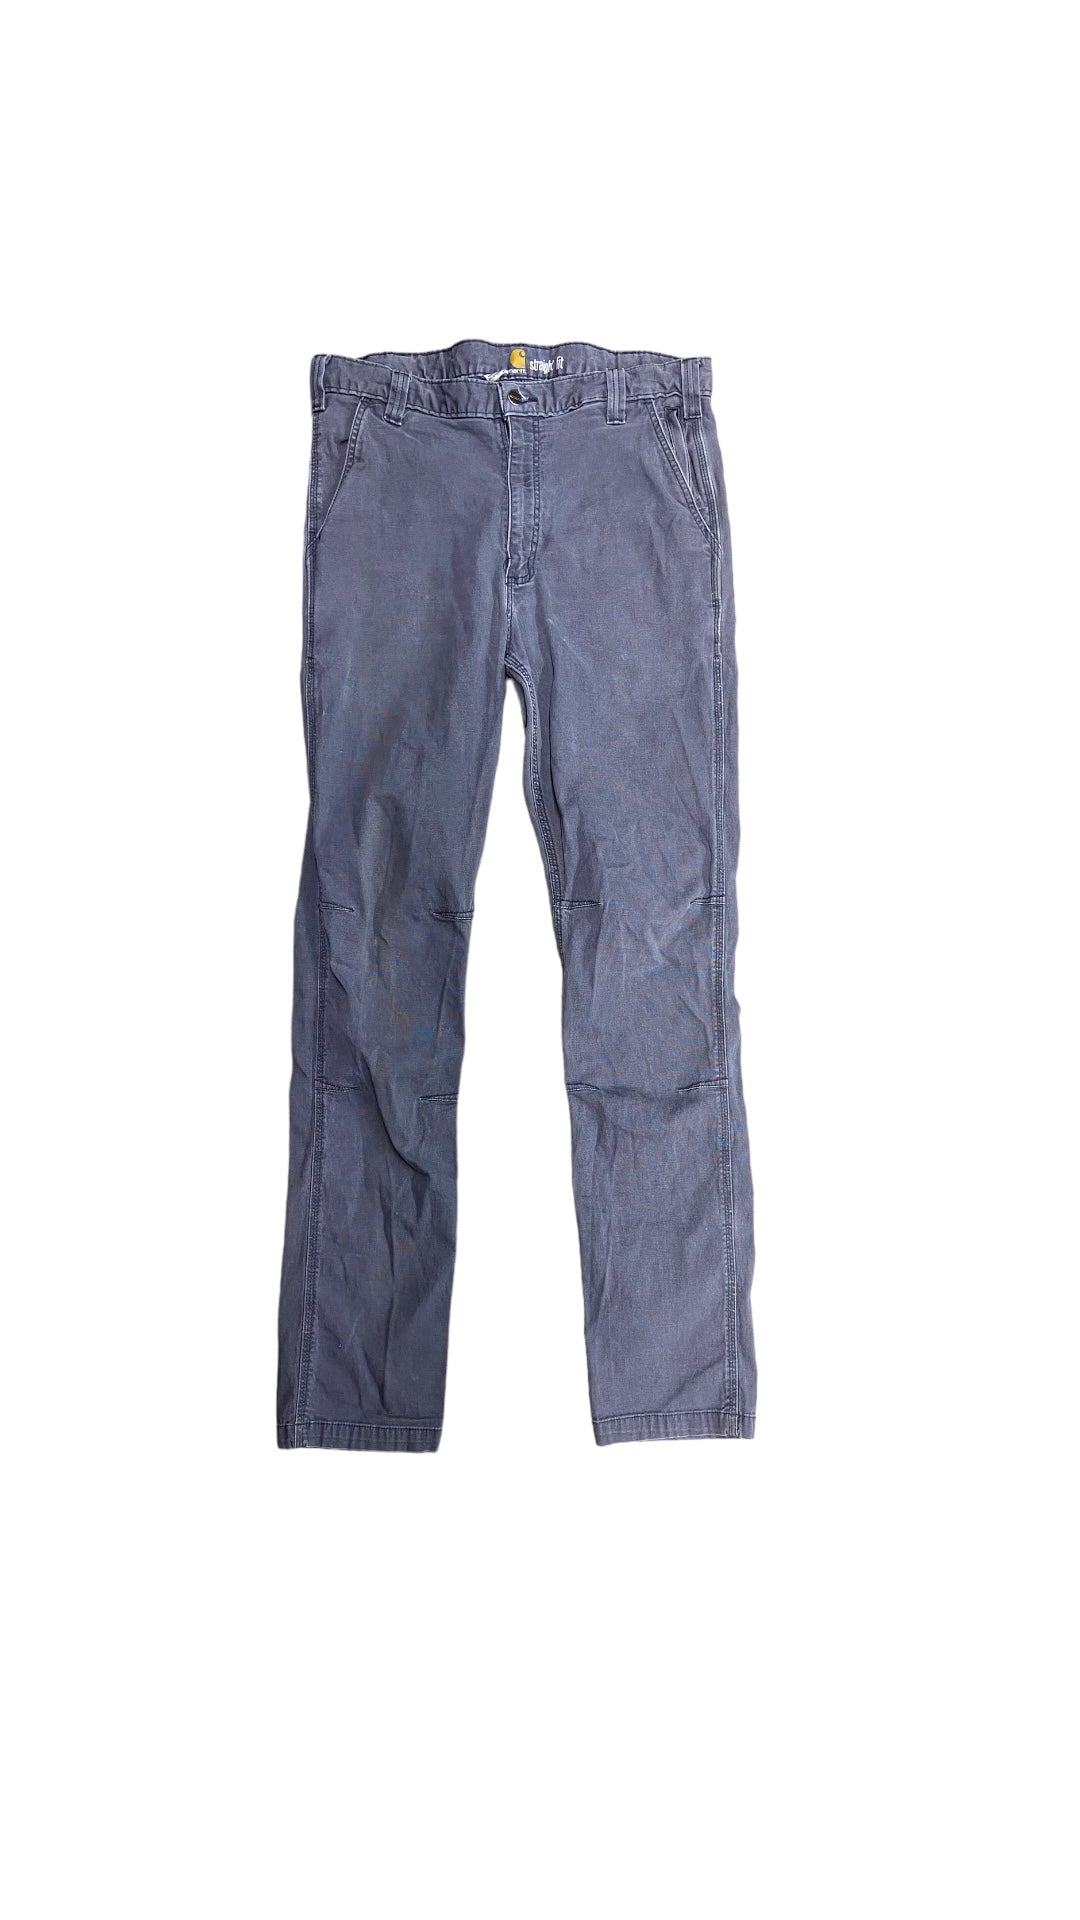 VTG Carhartt Straight Fit Gray Pants Sz 36x36